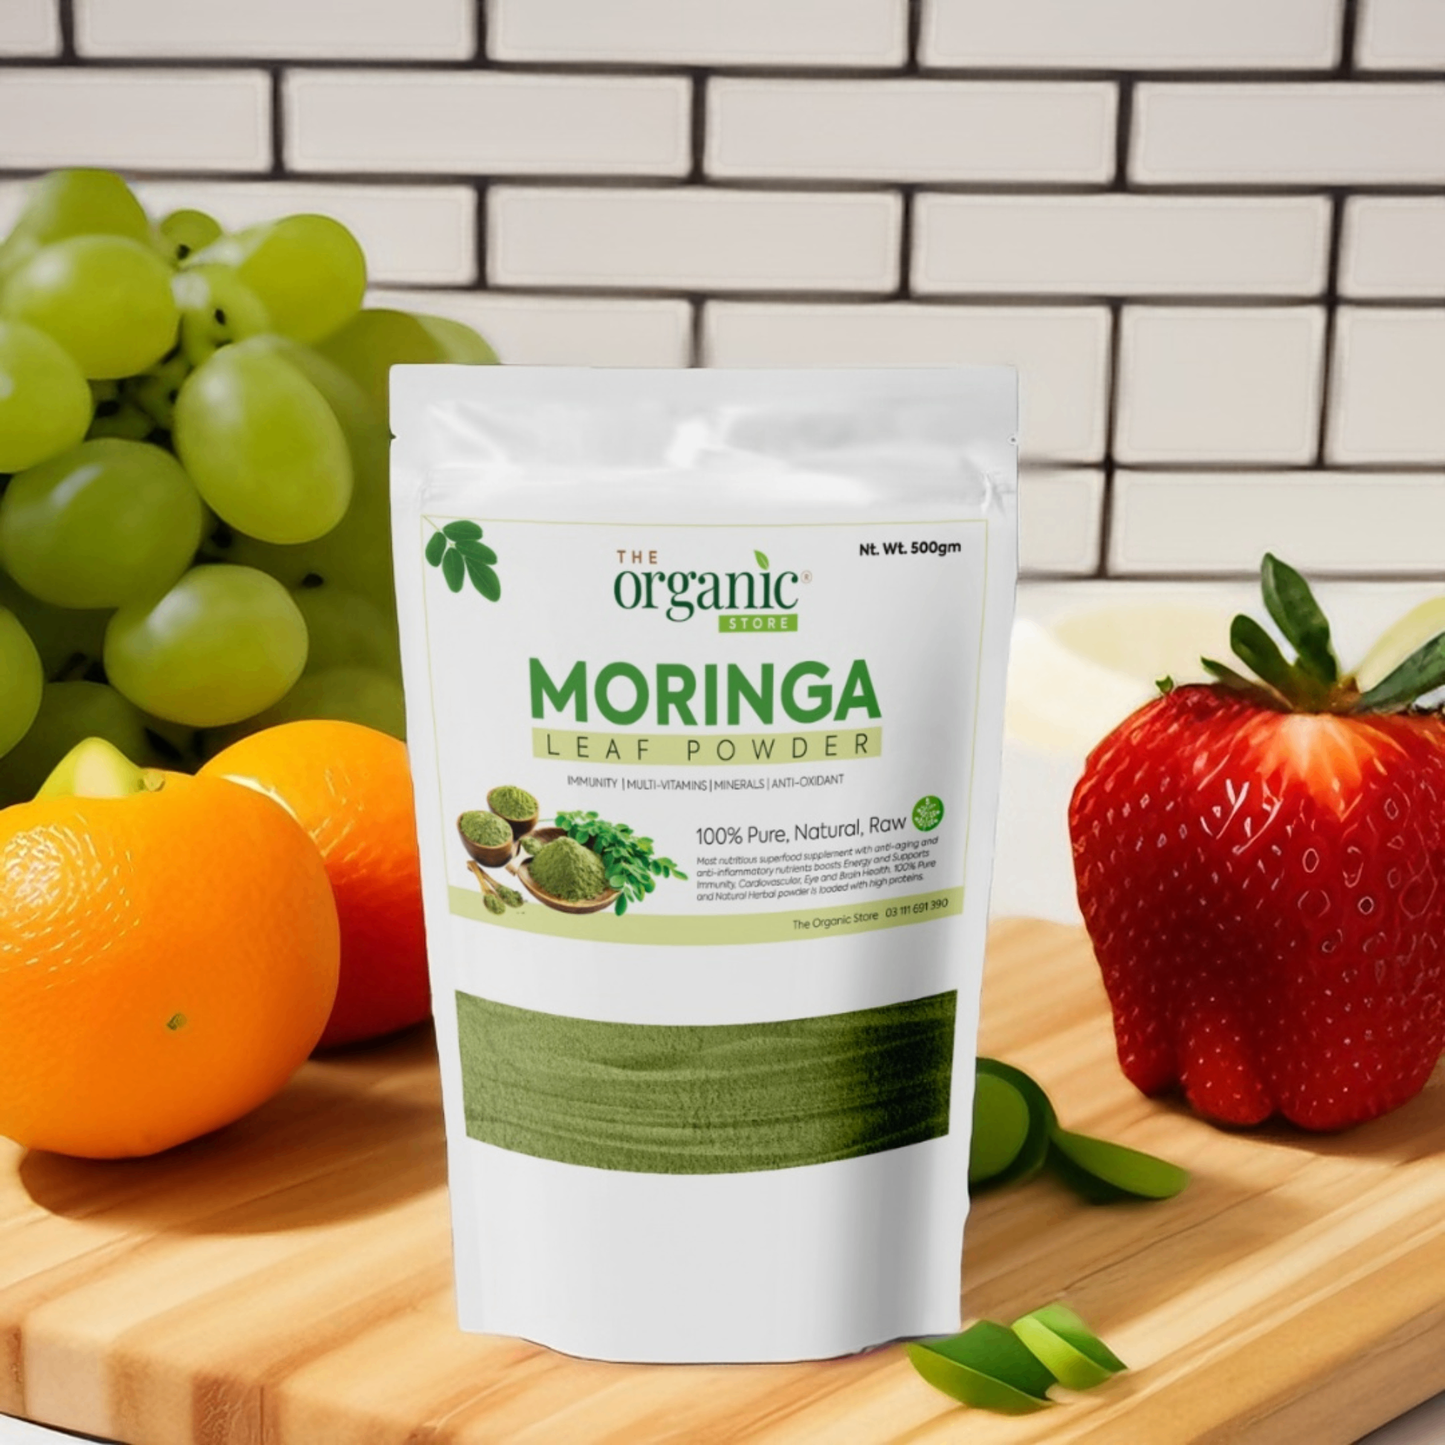 Moringa Leaves Powder - Raw, Pure, Natural - Oleifera